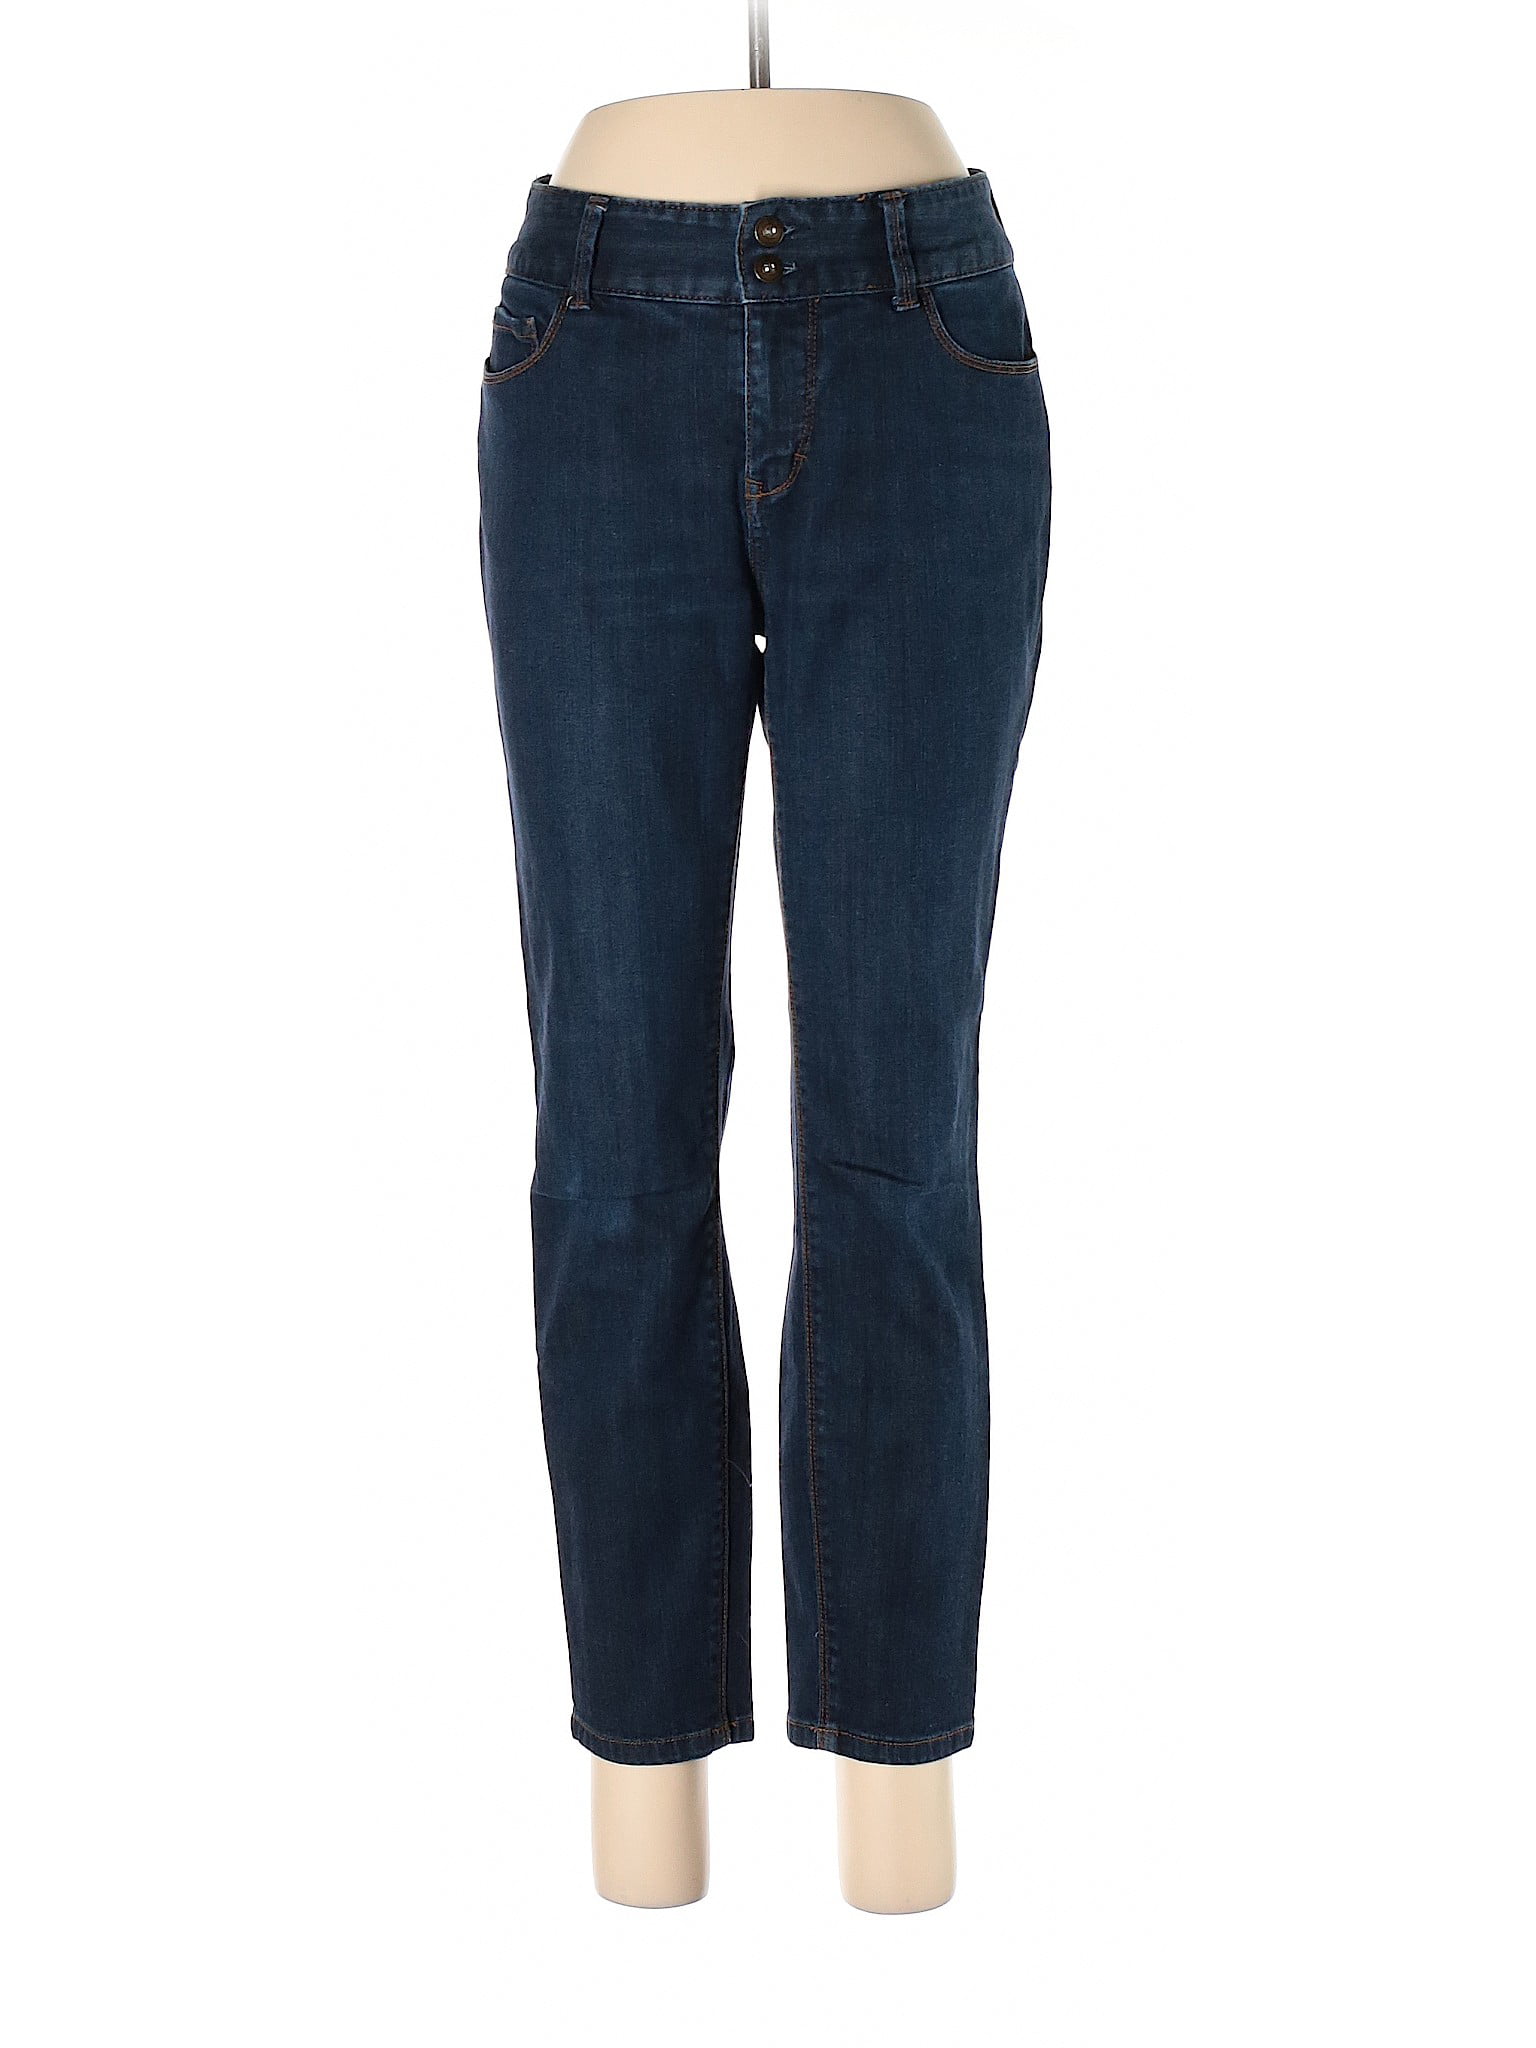 Boston Proper - Pre-Owned Boston Proper Women's Size 8 Jeans - Walmart ...